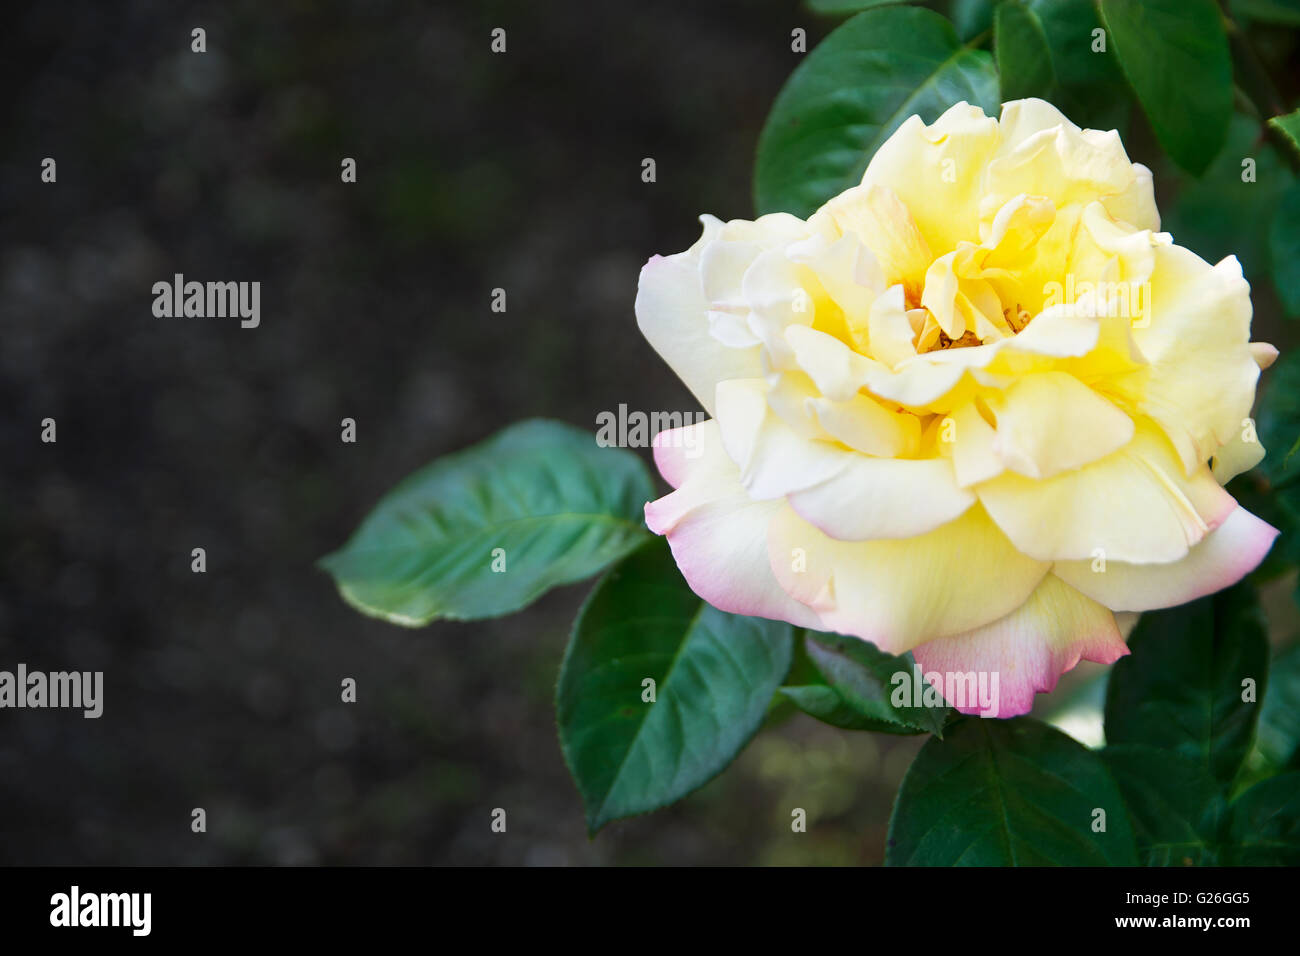 Yellow rose against dark blurry background Stock Photo